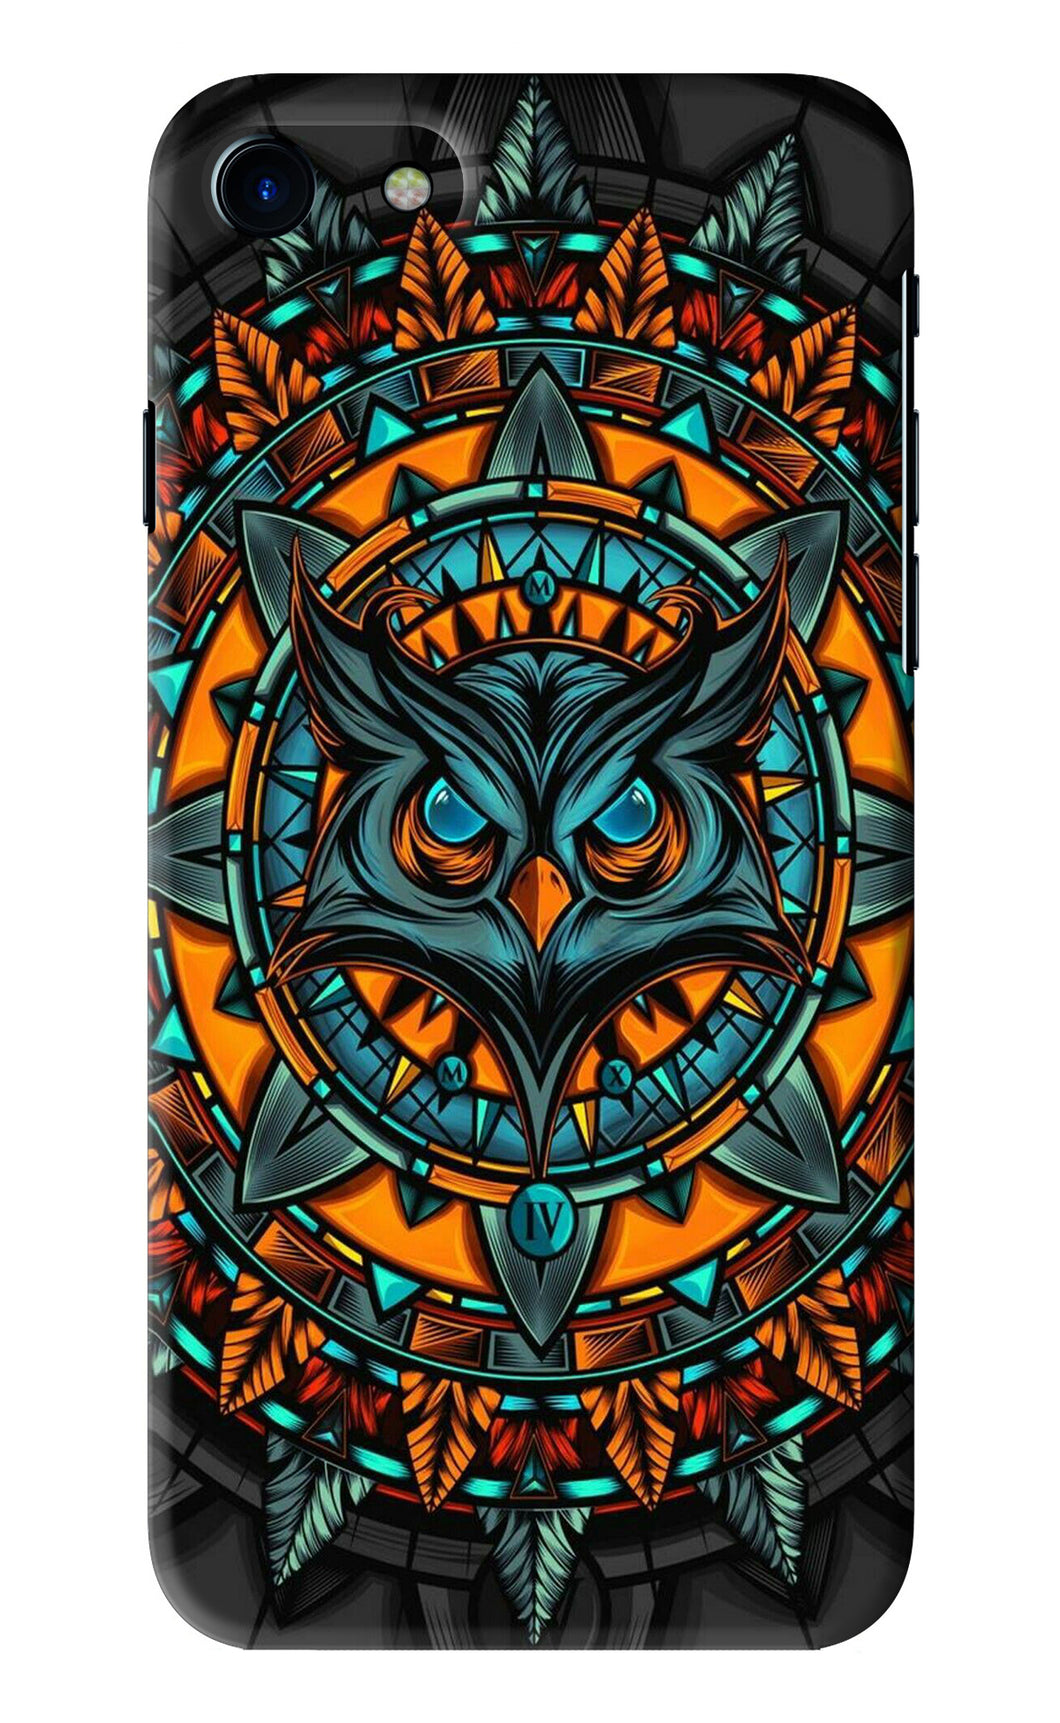 Angry Owl Art iPhone 7 Back Skin Wrap